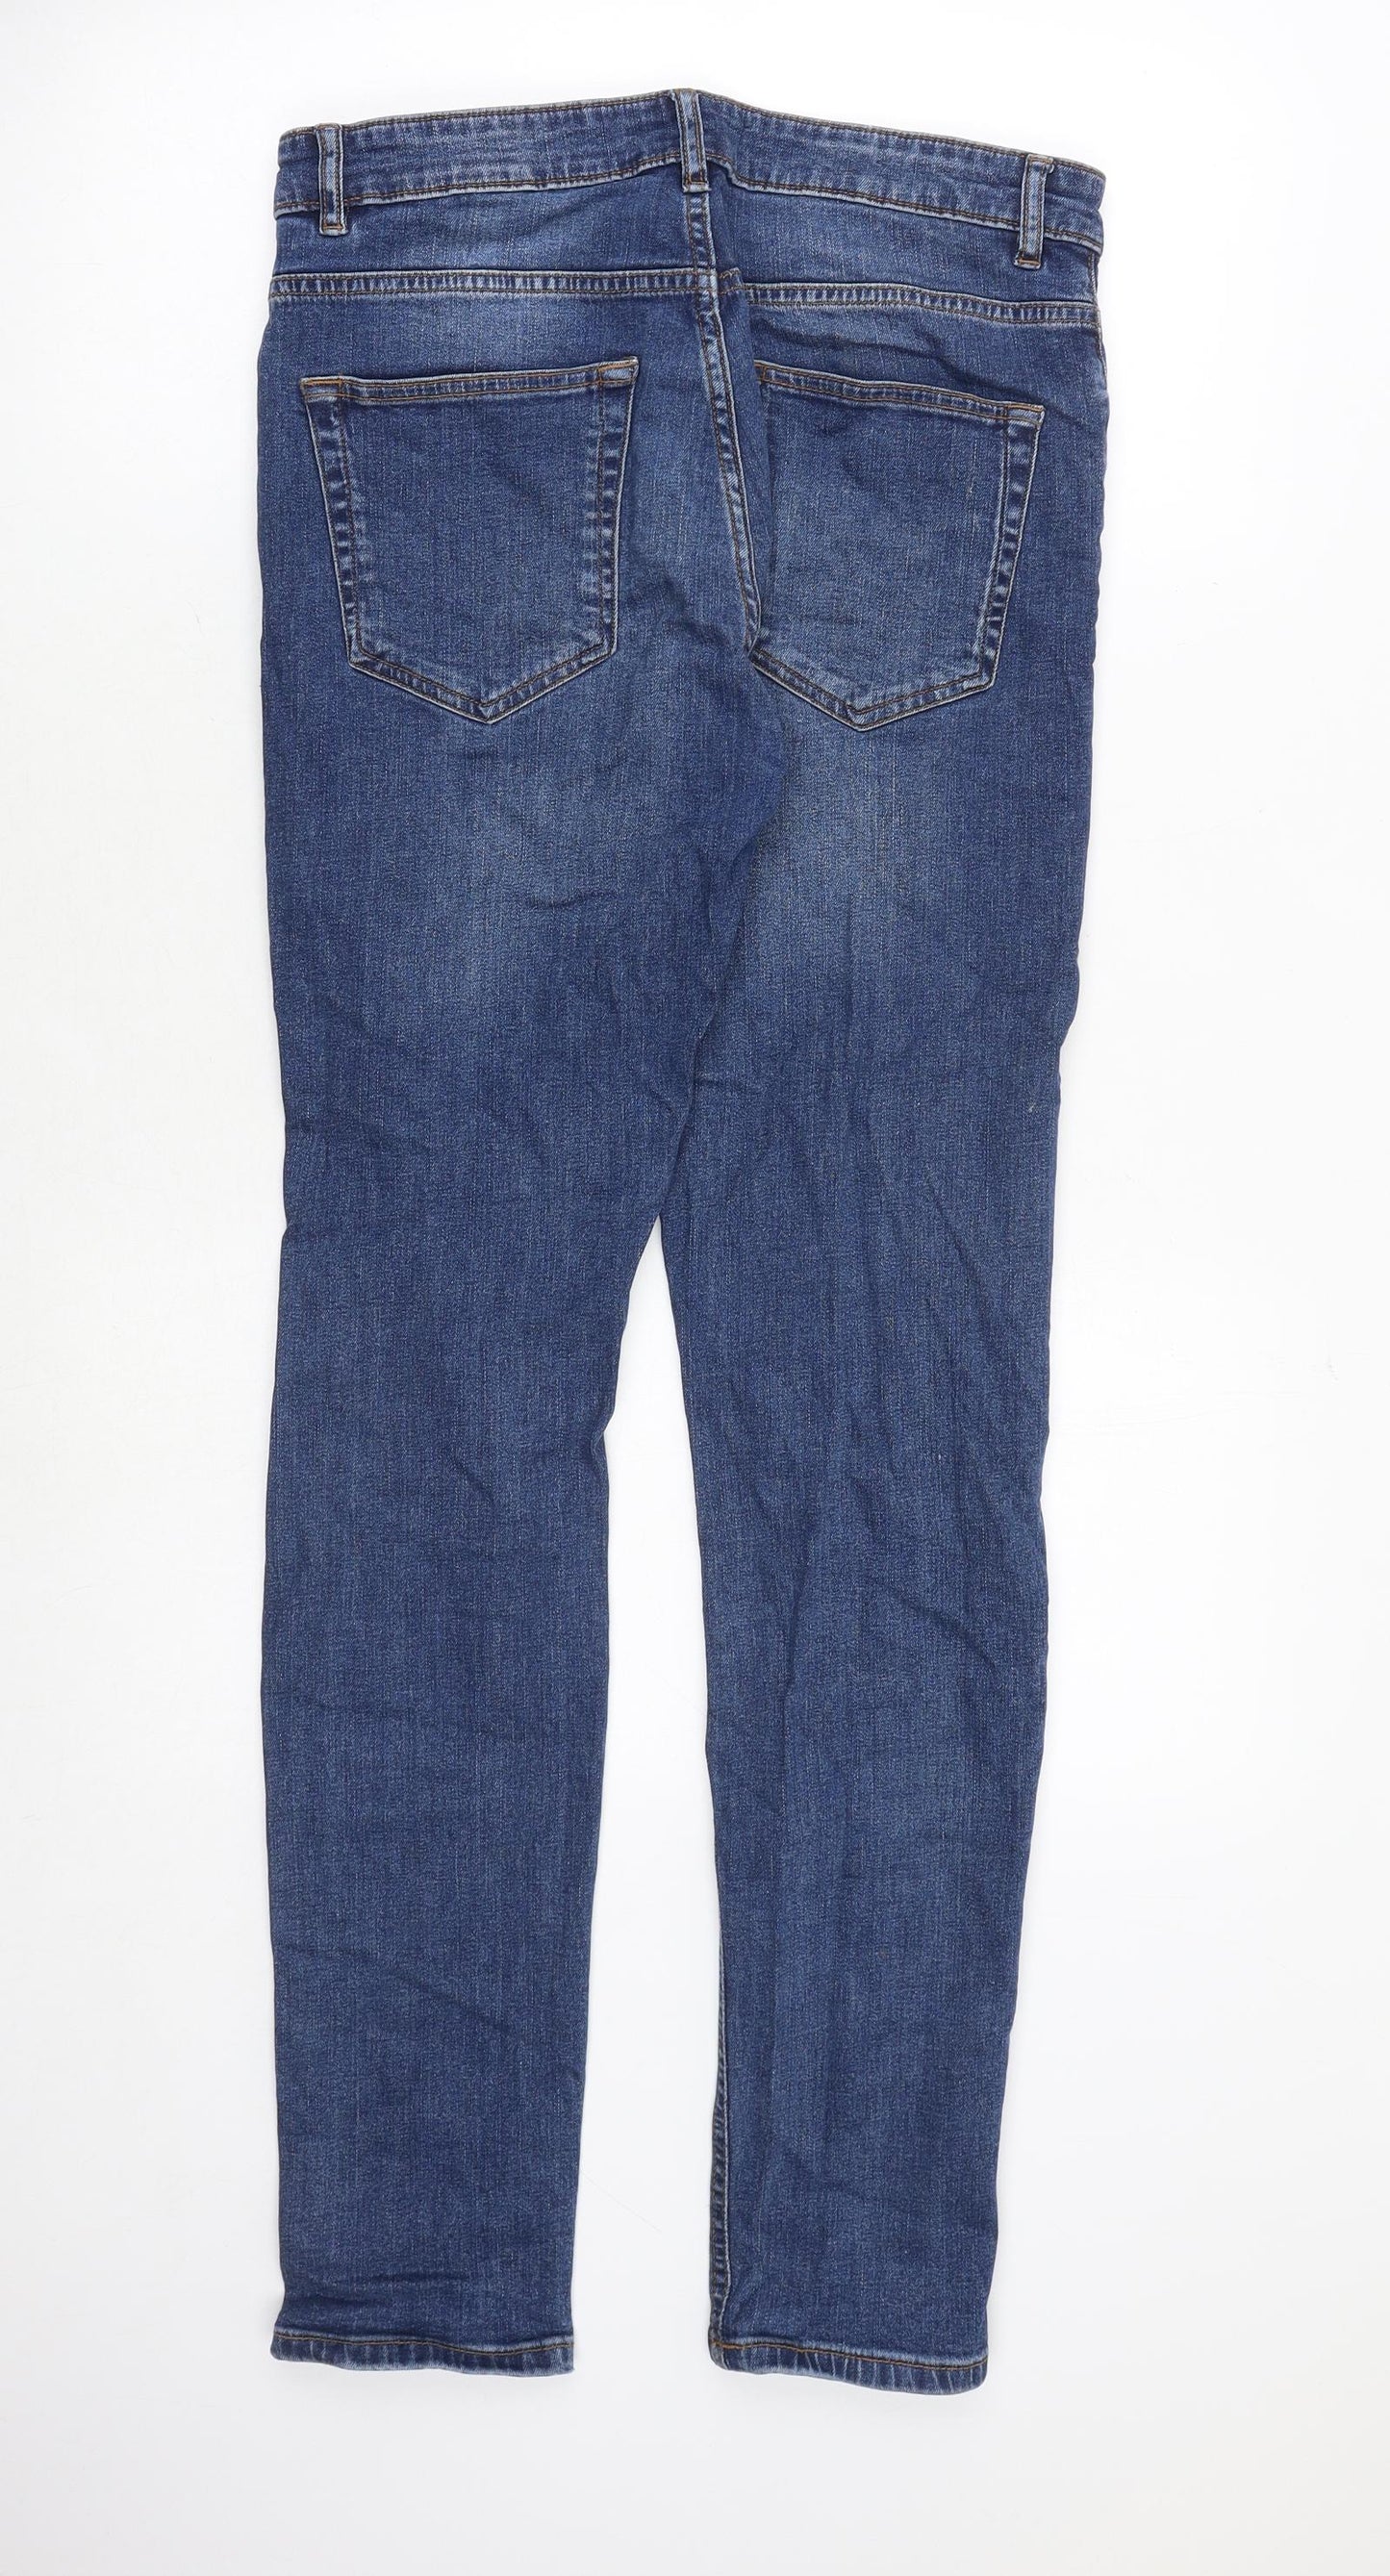 NEXT Mens Blue Cotton Skinny Jeans Size 30 in Regular Zip